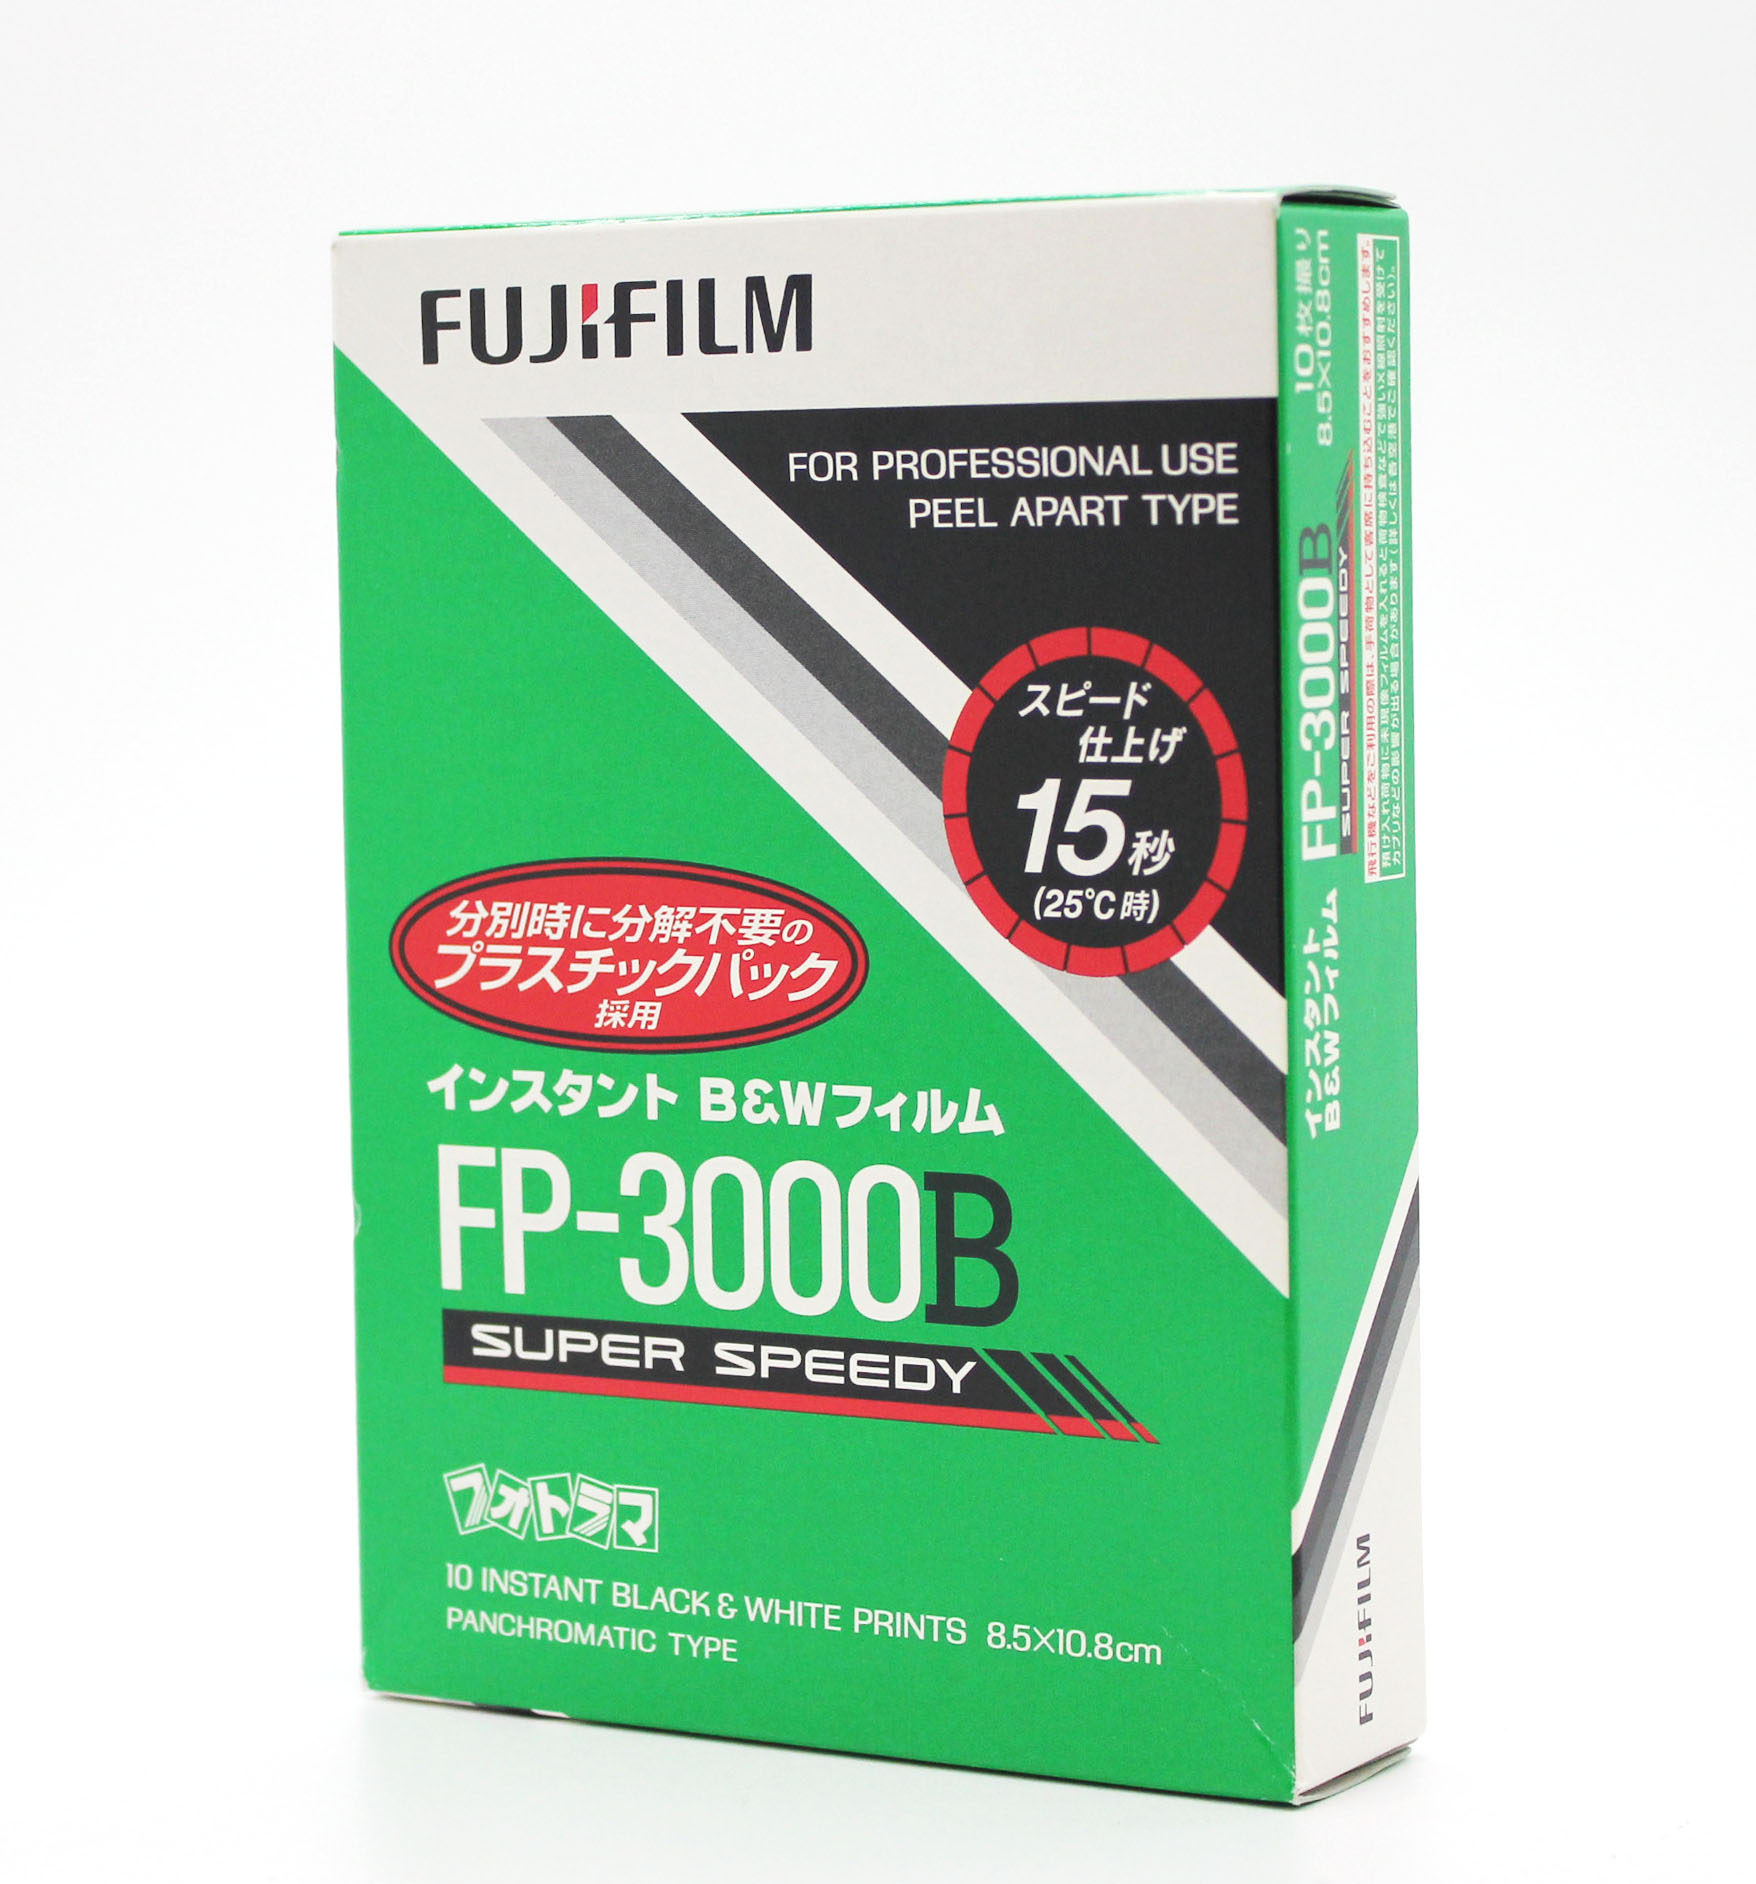 Japan Used Camera Shop | [New] Fuji Fujifilm FP-3000B 8.5x10.8cm Instant Black & White Film (Expired 09/2013) from Japan